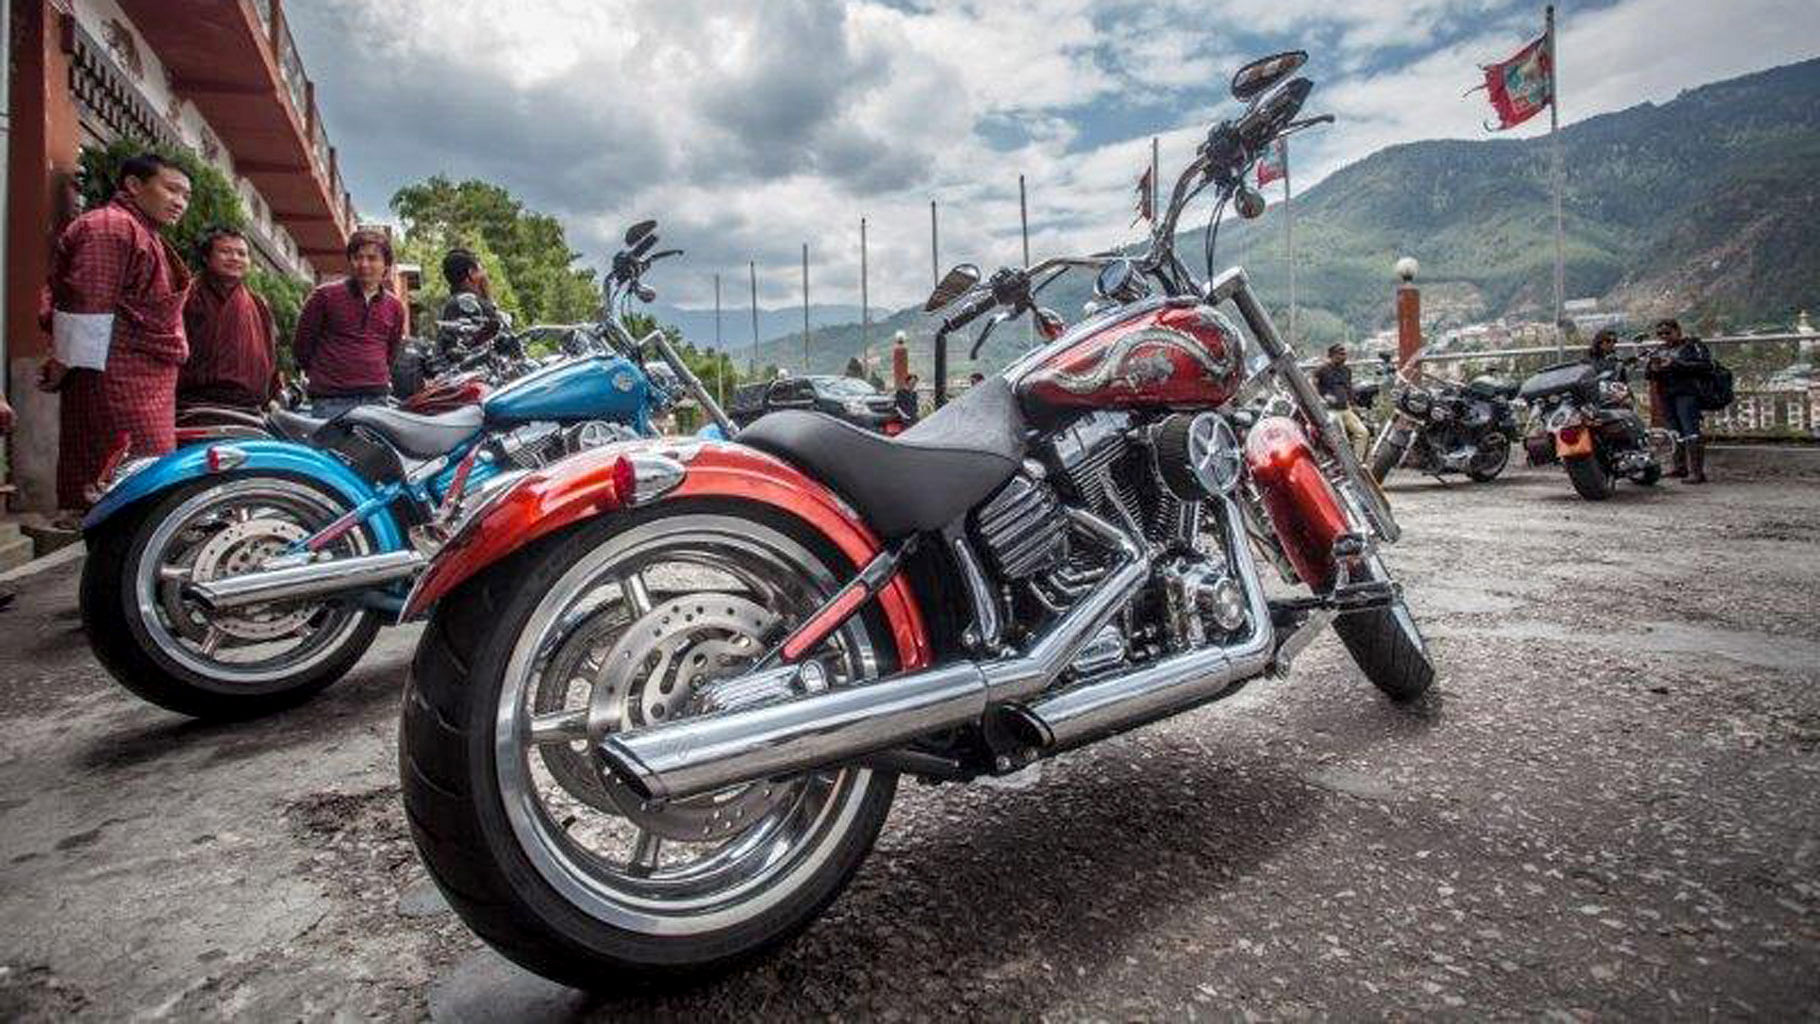 Third edition of International Harley-Davidson H.O.G. Ride was conducted in Bhutan. (Photo: Harley-Davidson)